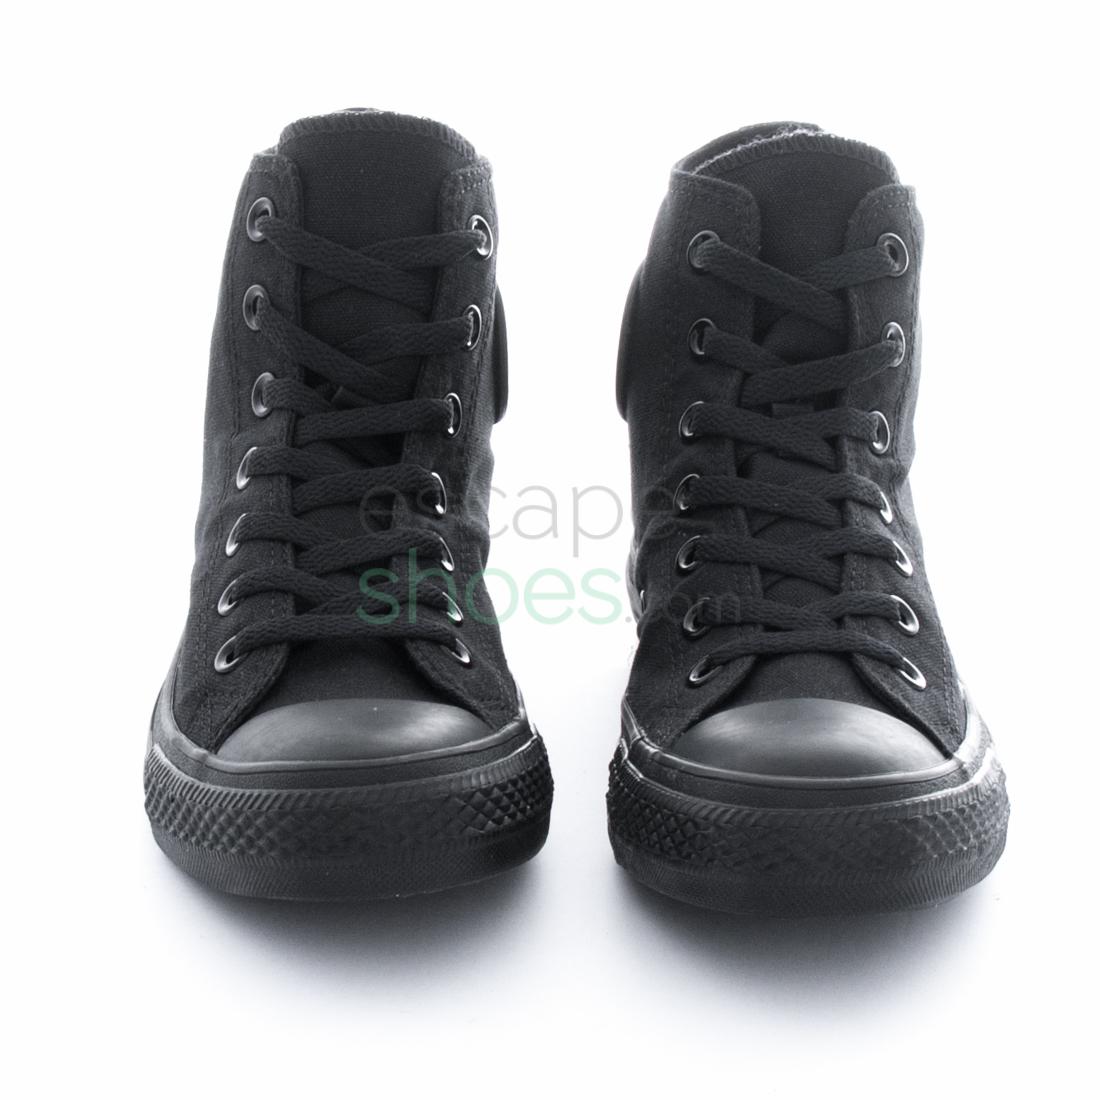 converse all star hi shoes black monochrome